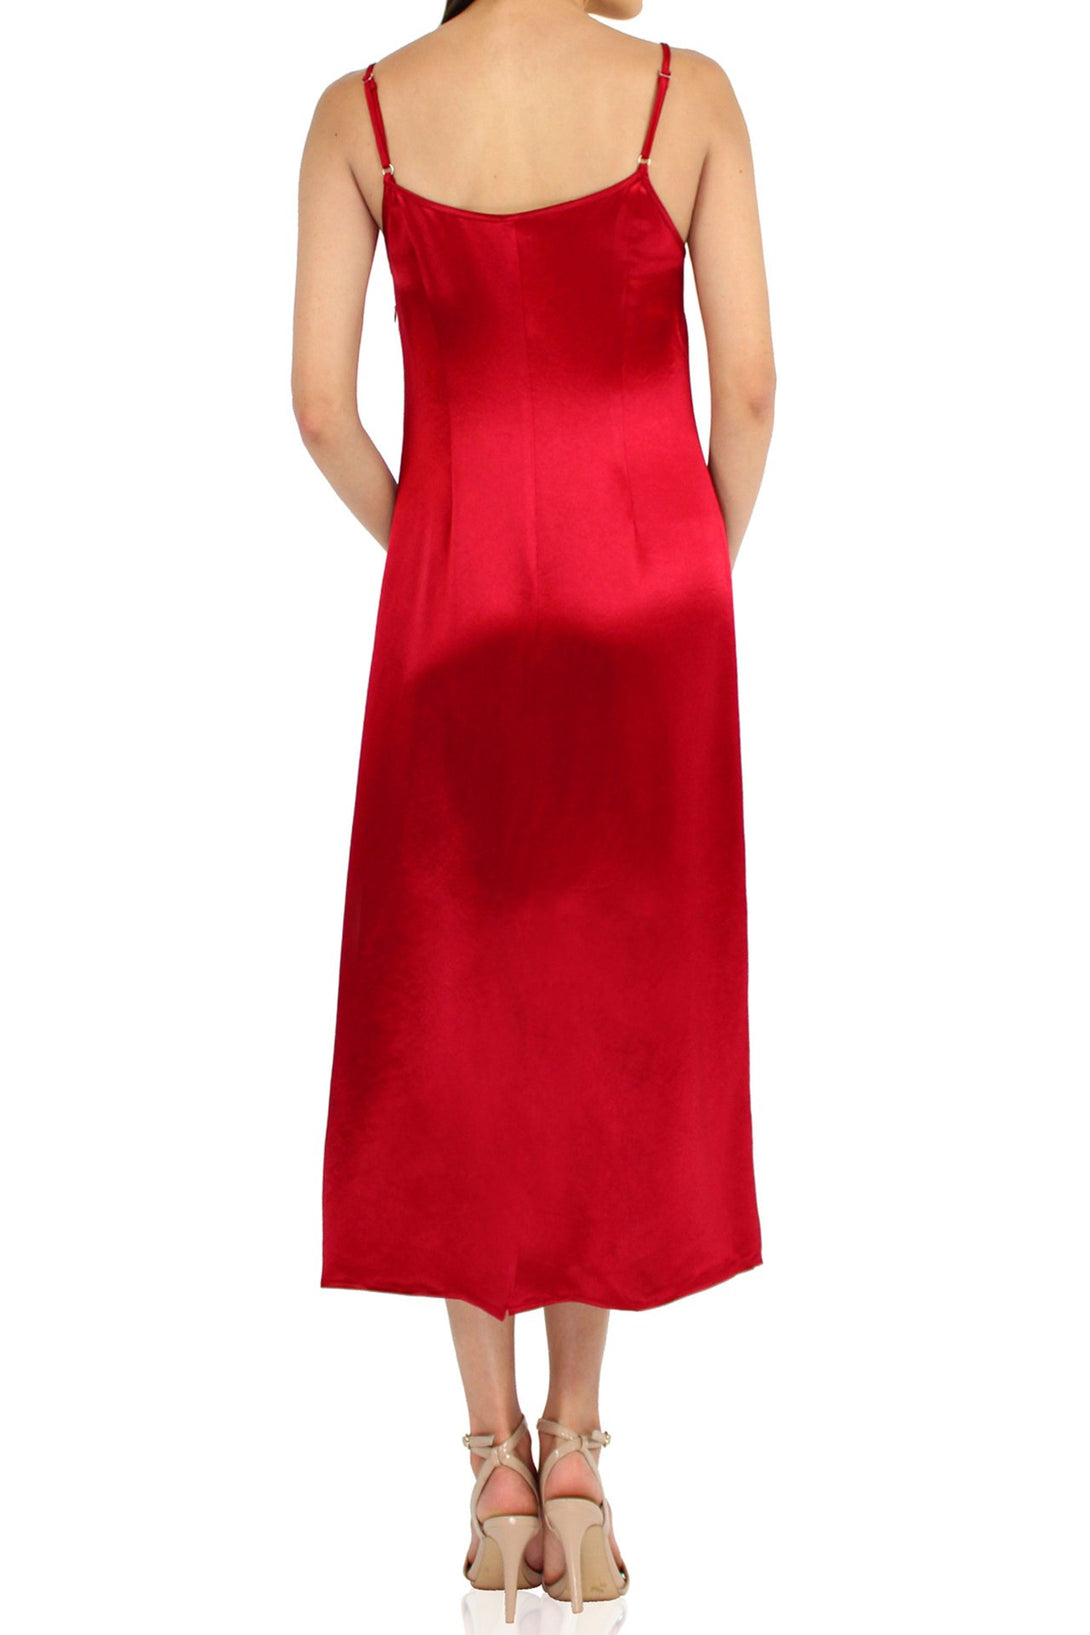 Designer-Red-Midi-Dress-By-Kyle-Richard